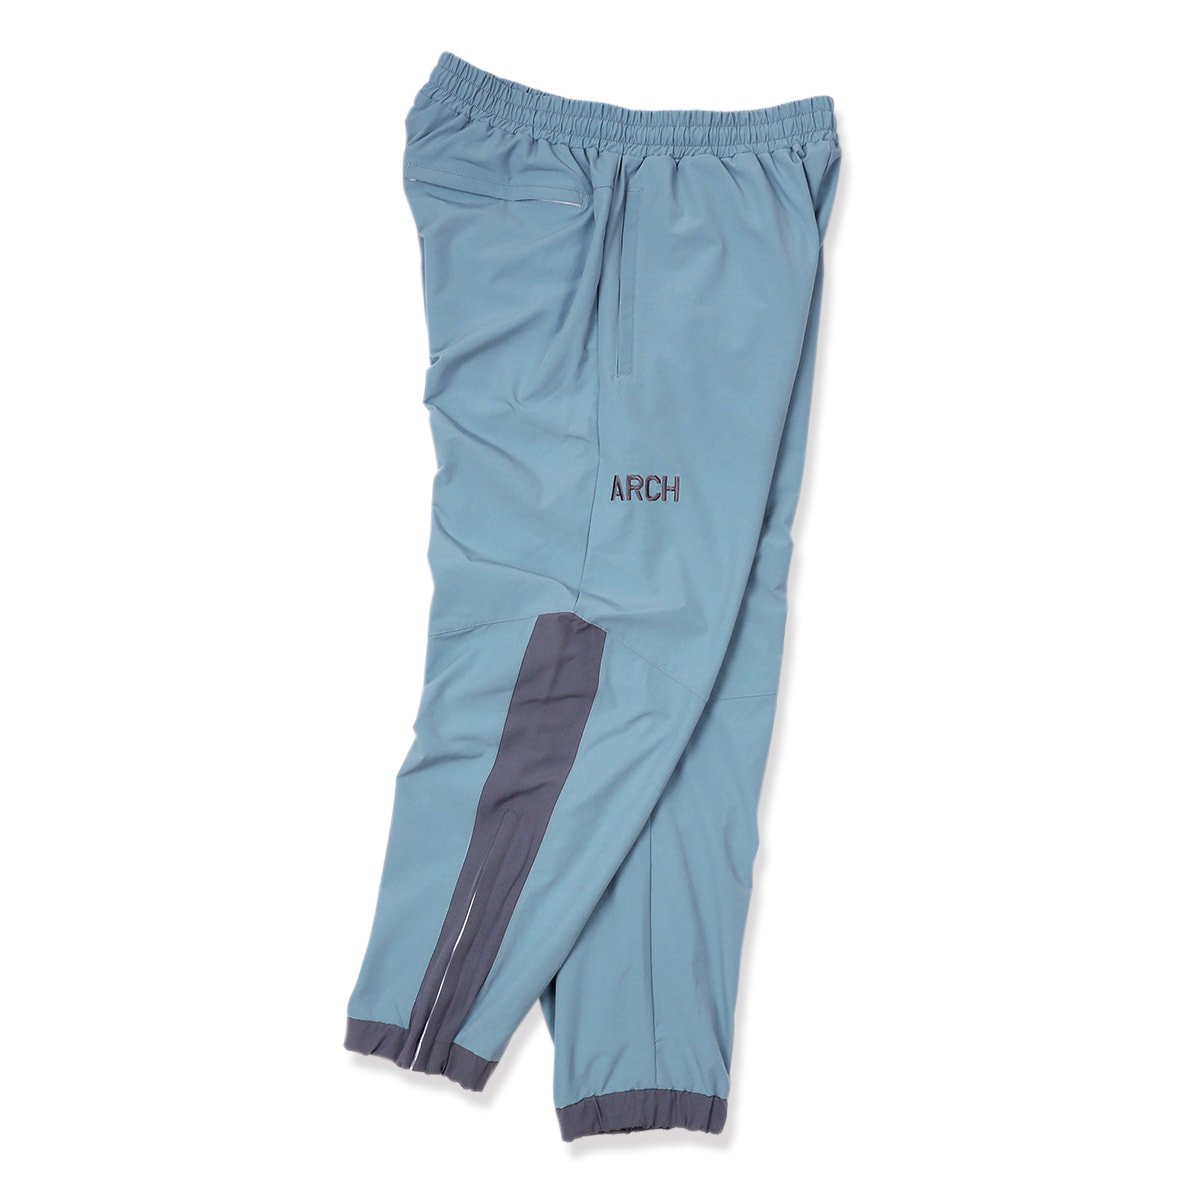 classic track pants【stone blue】 - Arch ☆ アーチ [バスケットボール＆ライフスタイルウェア  BasketballLifestyle wear]